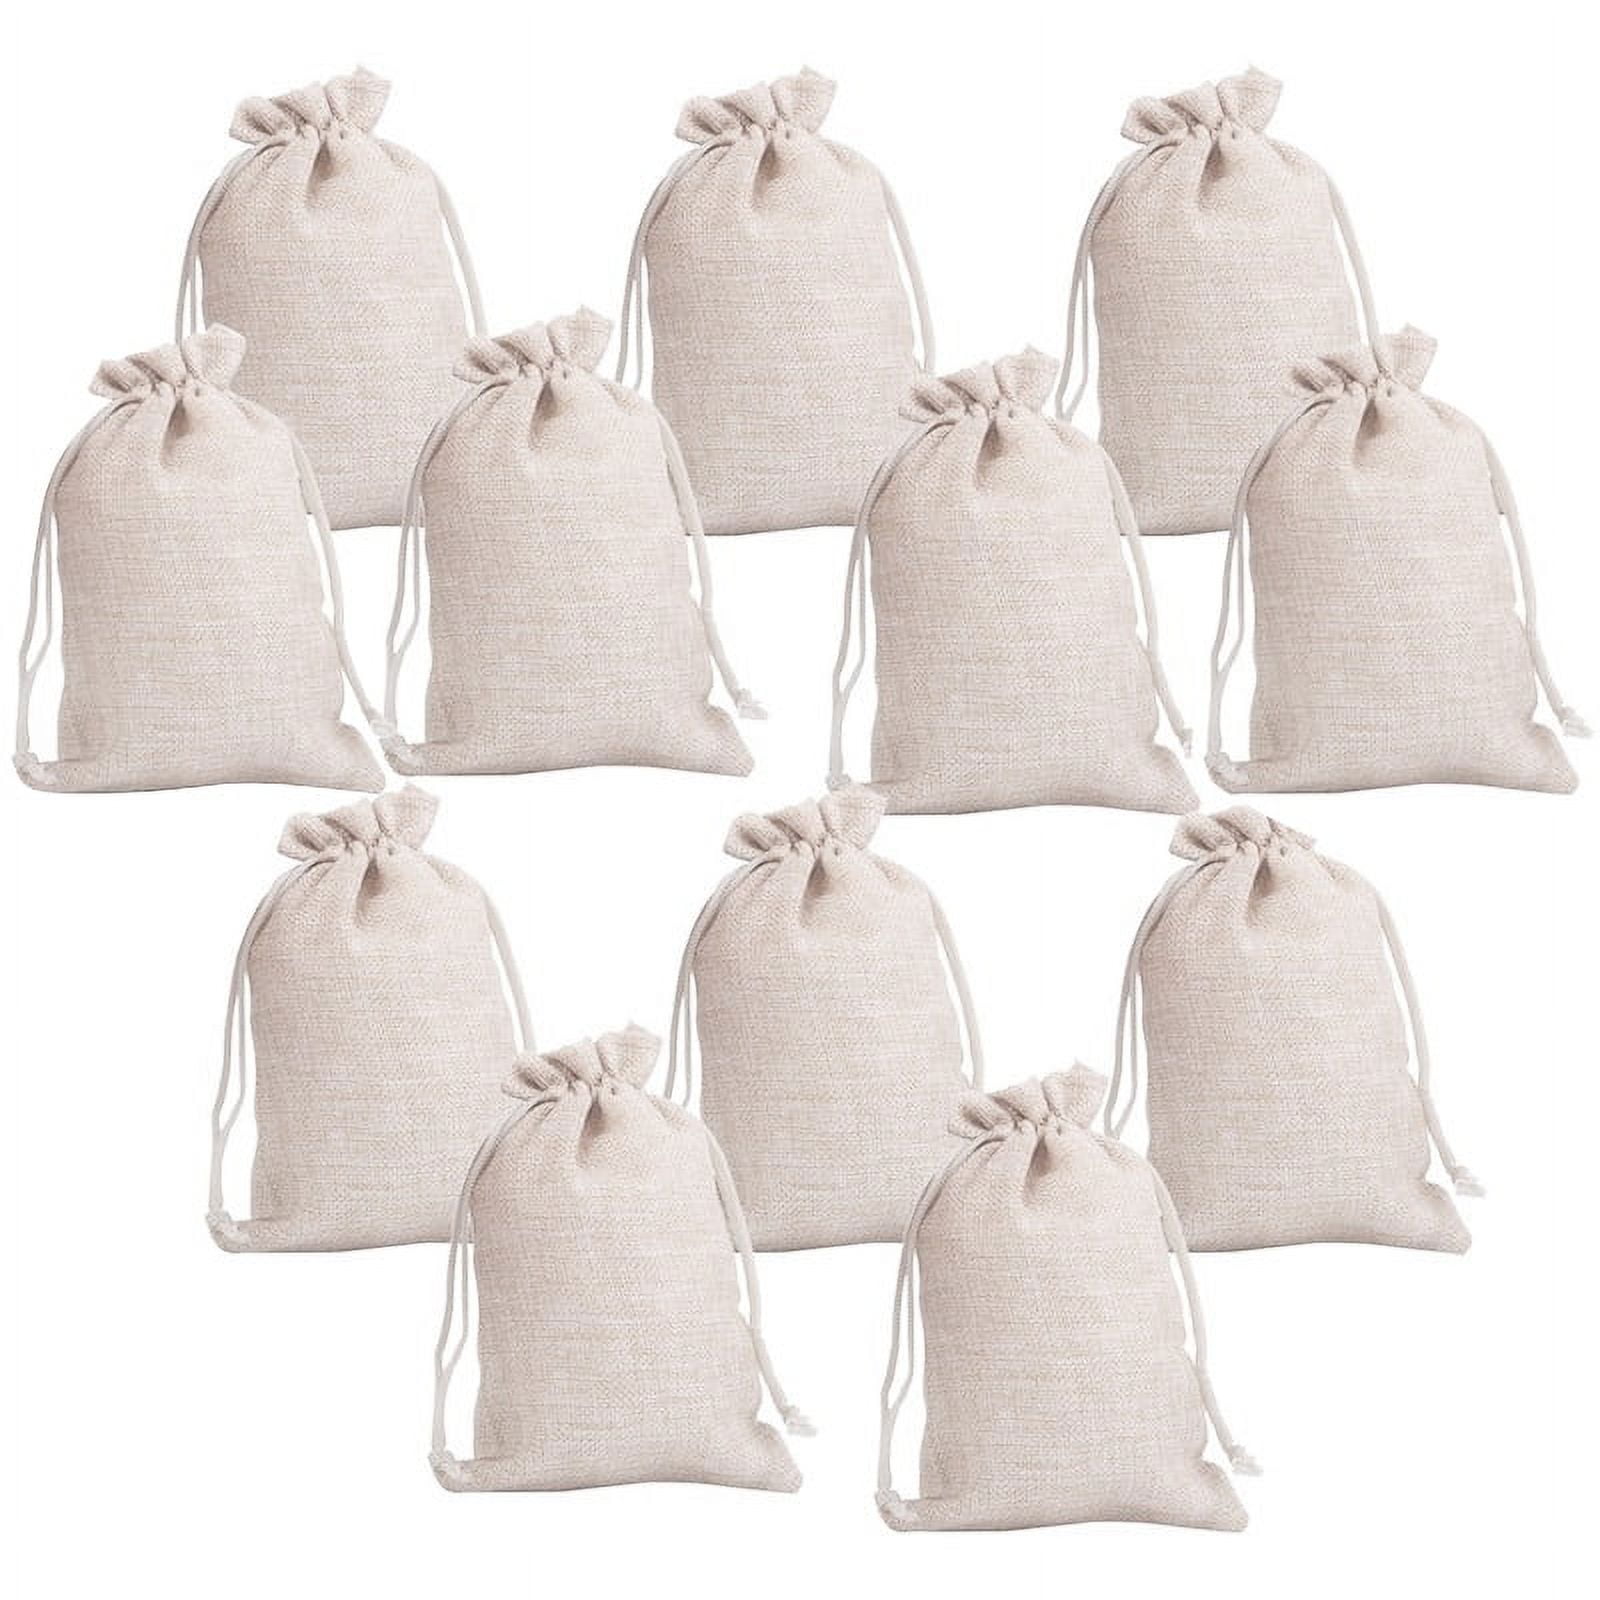 Amazon.com: Tendwarm 20 Pieces 6x8 Inches Cotton Drawstring Bags Reusable  Muslin Sachet Bag for Party Wedding Storage Home Supplies : Home & Kitchen